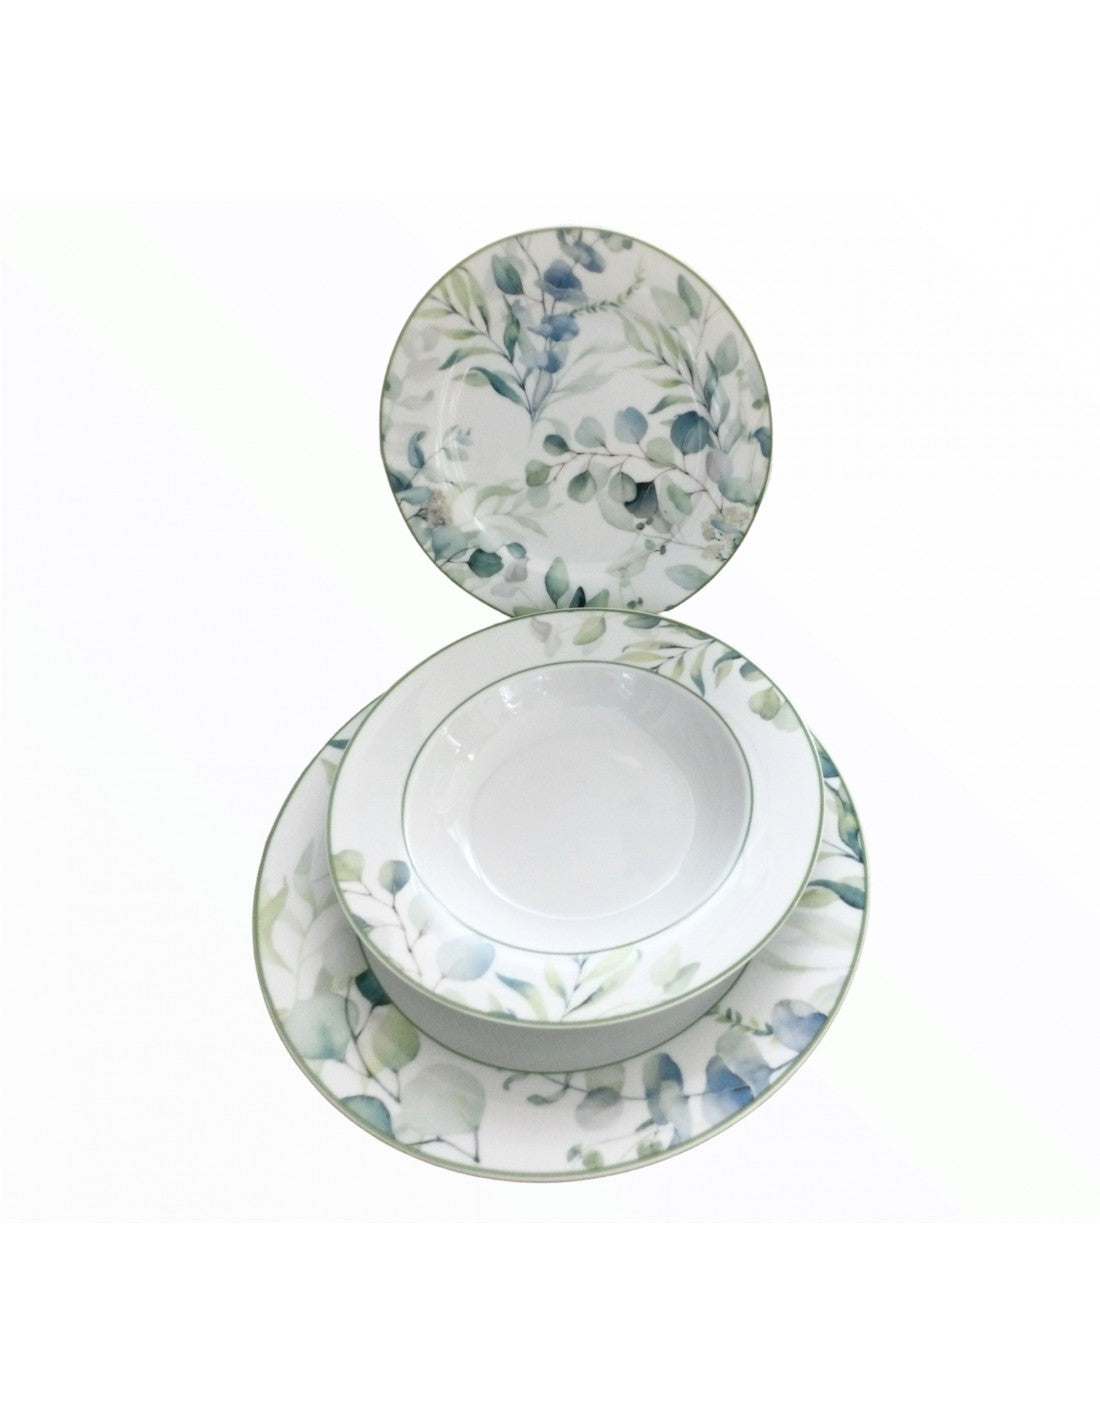 Hervit - Botanic Verde Servizio di piatti tavola 18 pezzi in porcellana